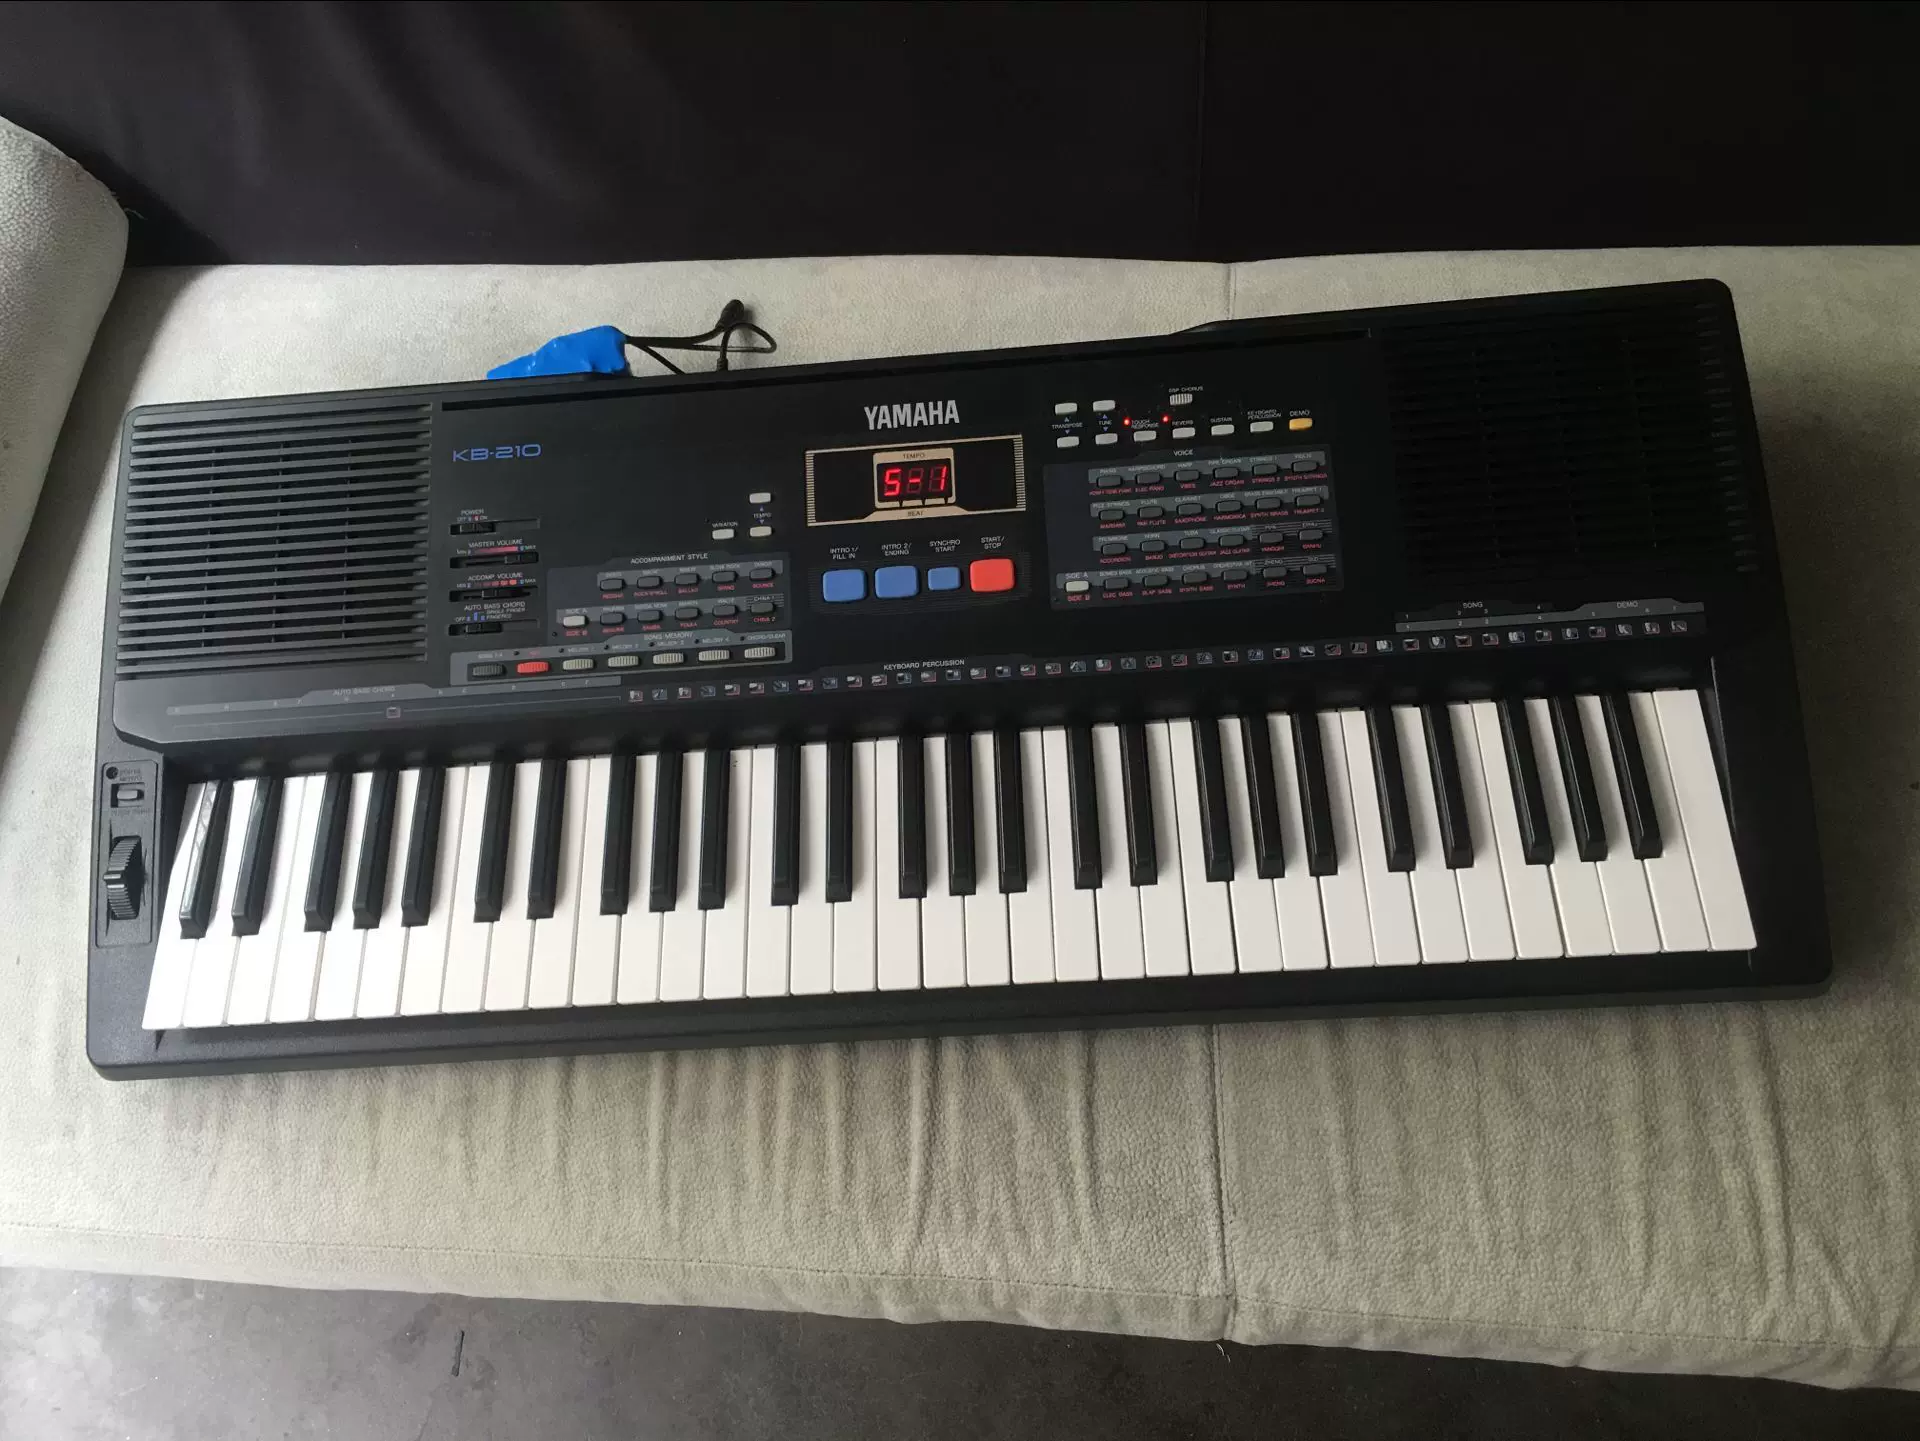 YAMAHA雅马哈KB210二手电子琴考级演奏用琴61键力度键盘全正常-Taobao